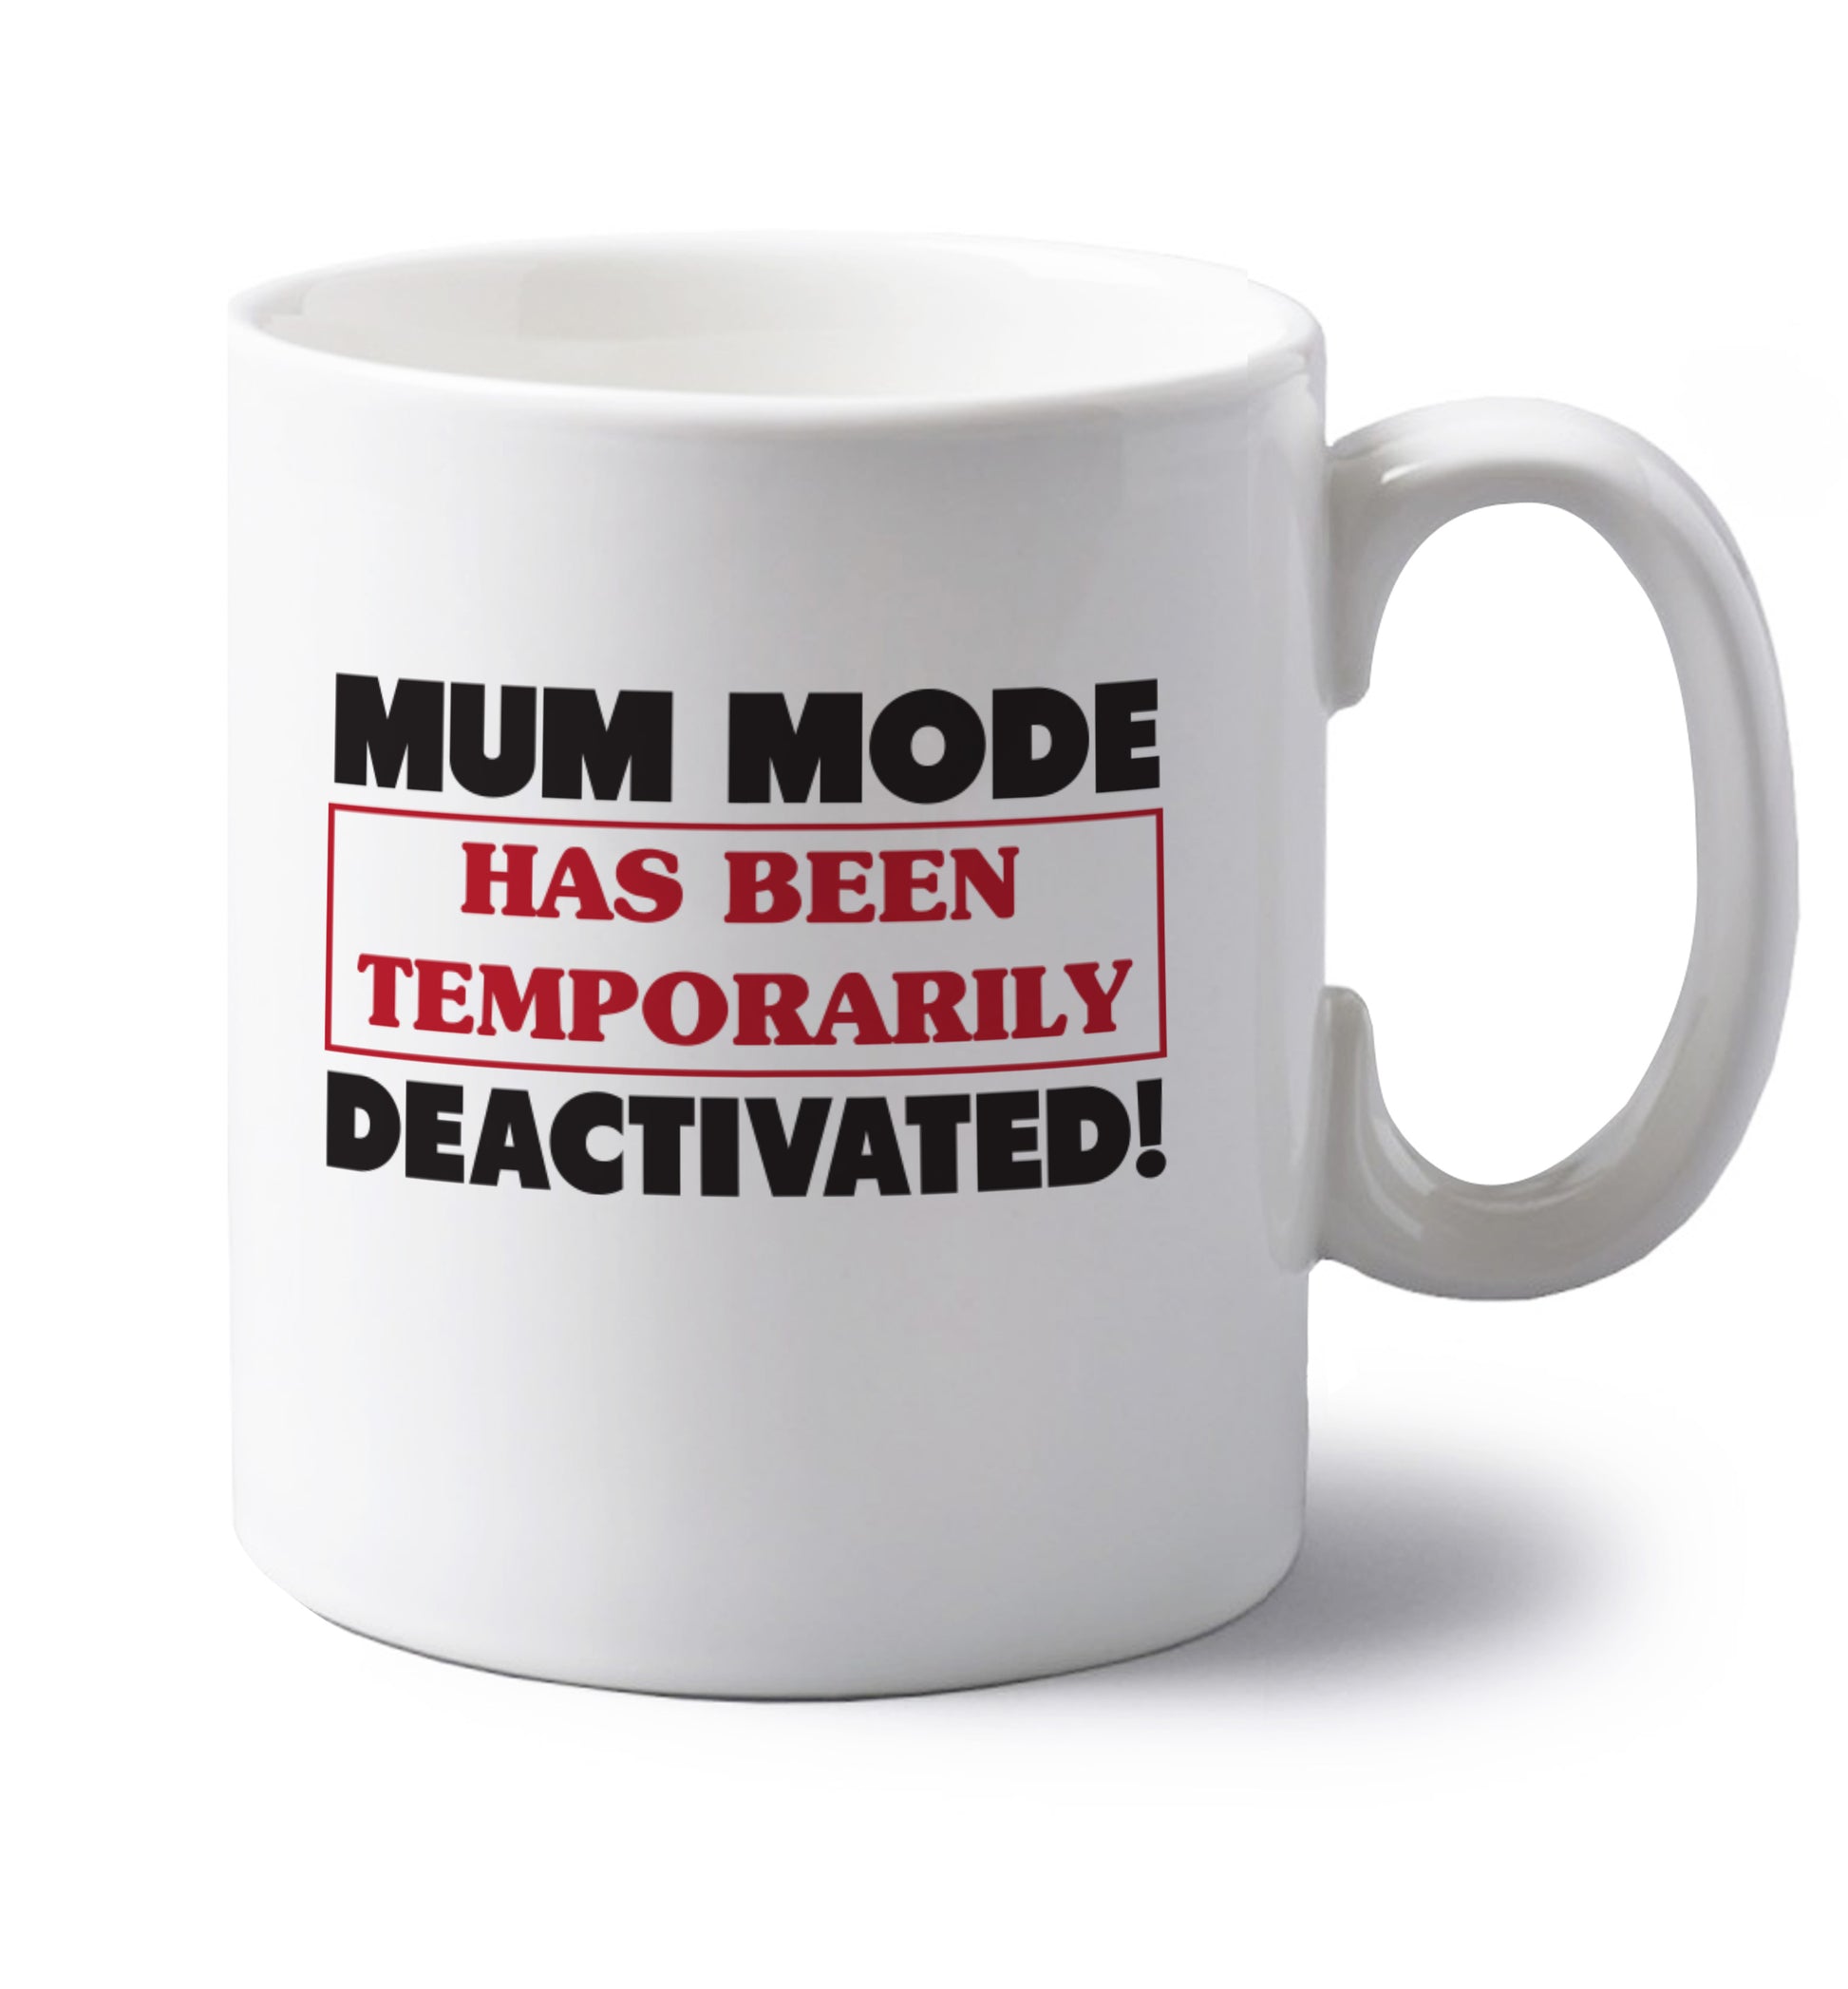 Mum mode has been temporarily deactivated! left handed white ceramic mug 